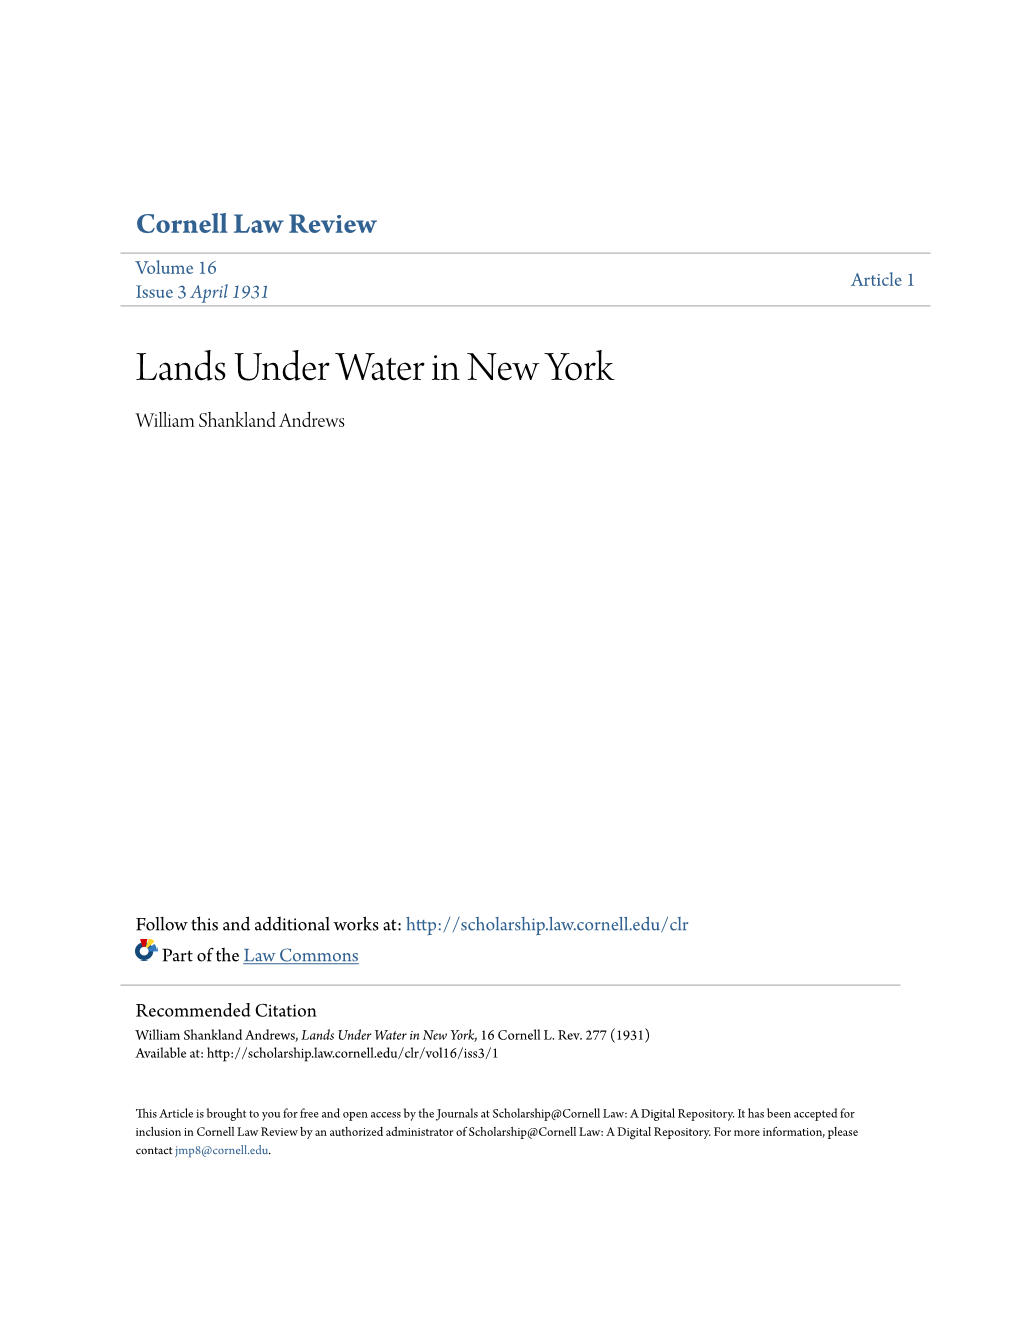 Lands Under Water in New York William Shankland Andrews